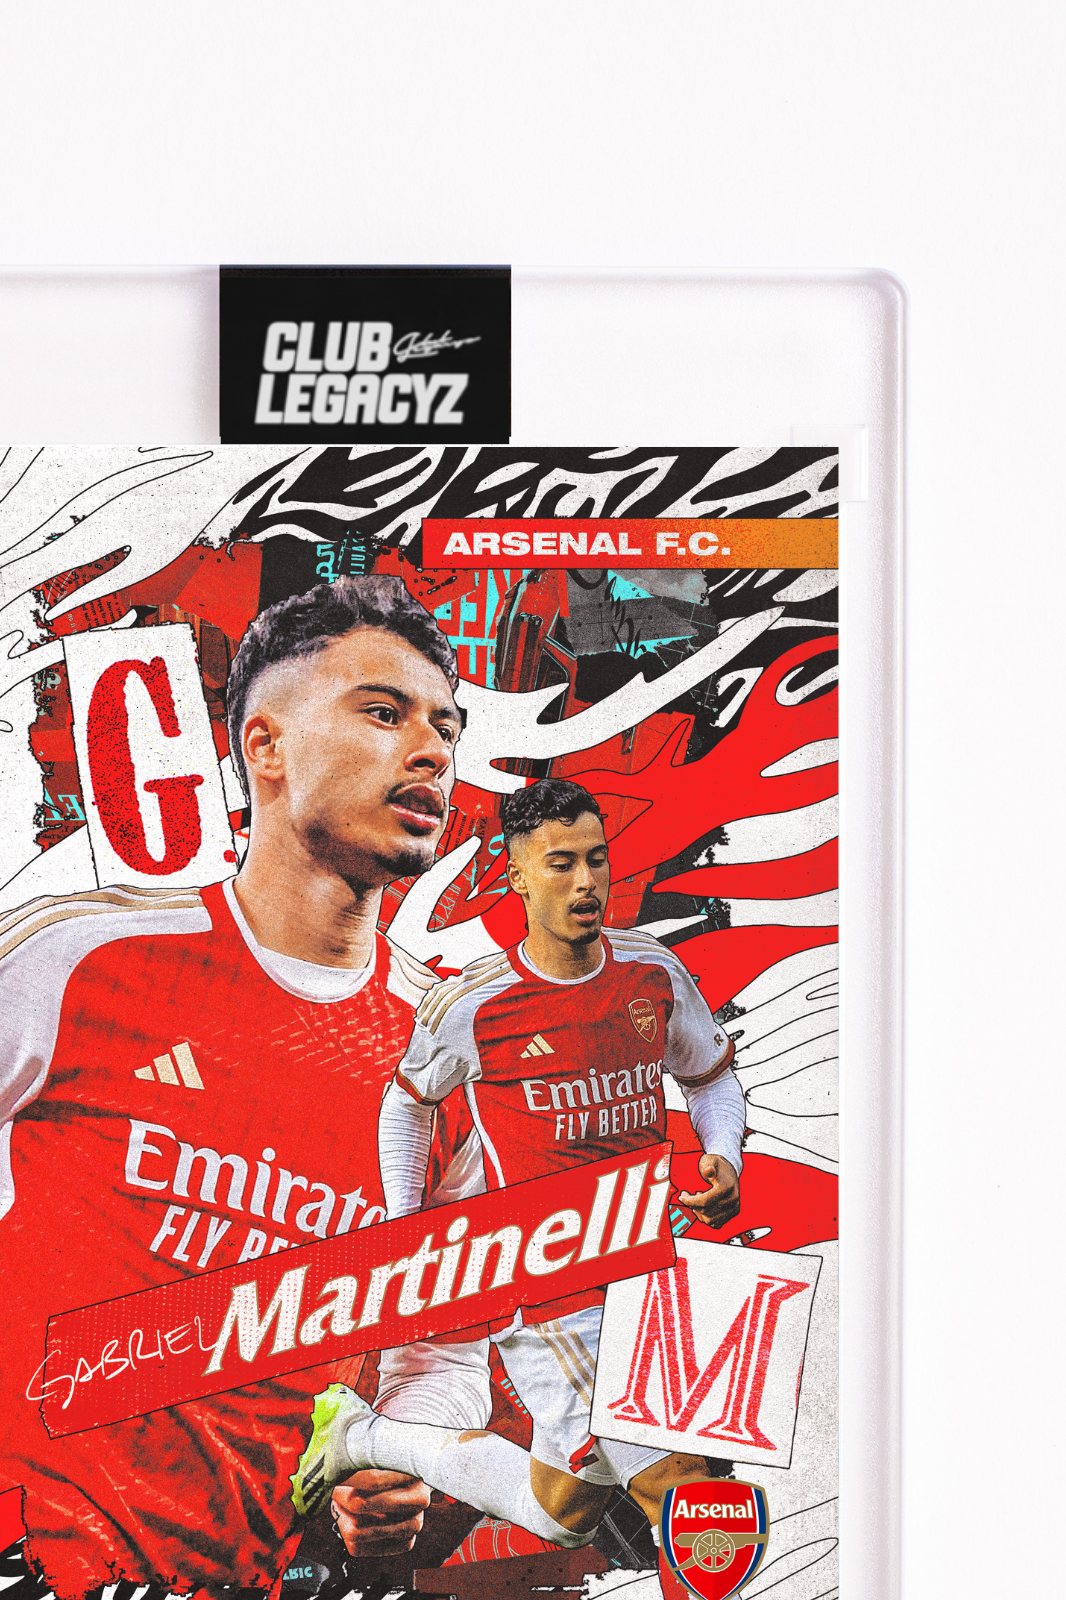 Arsenal FC - Gabriel Martinelli Icon limited to 50